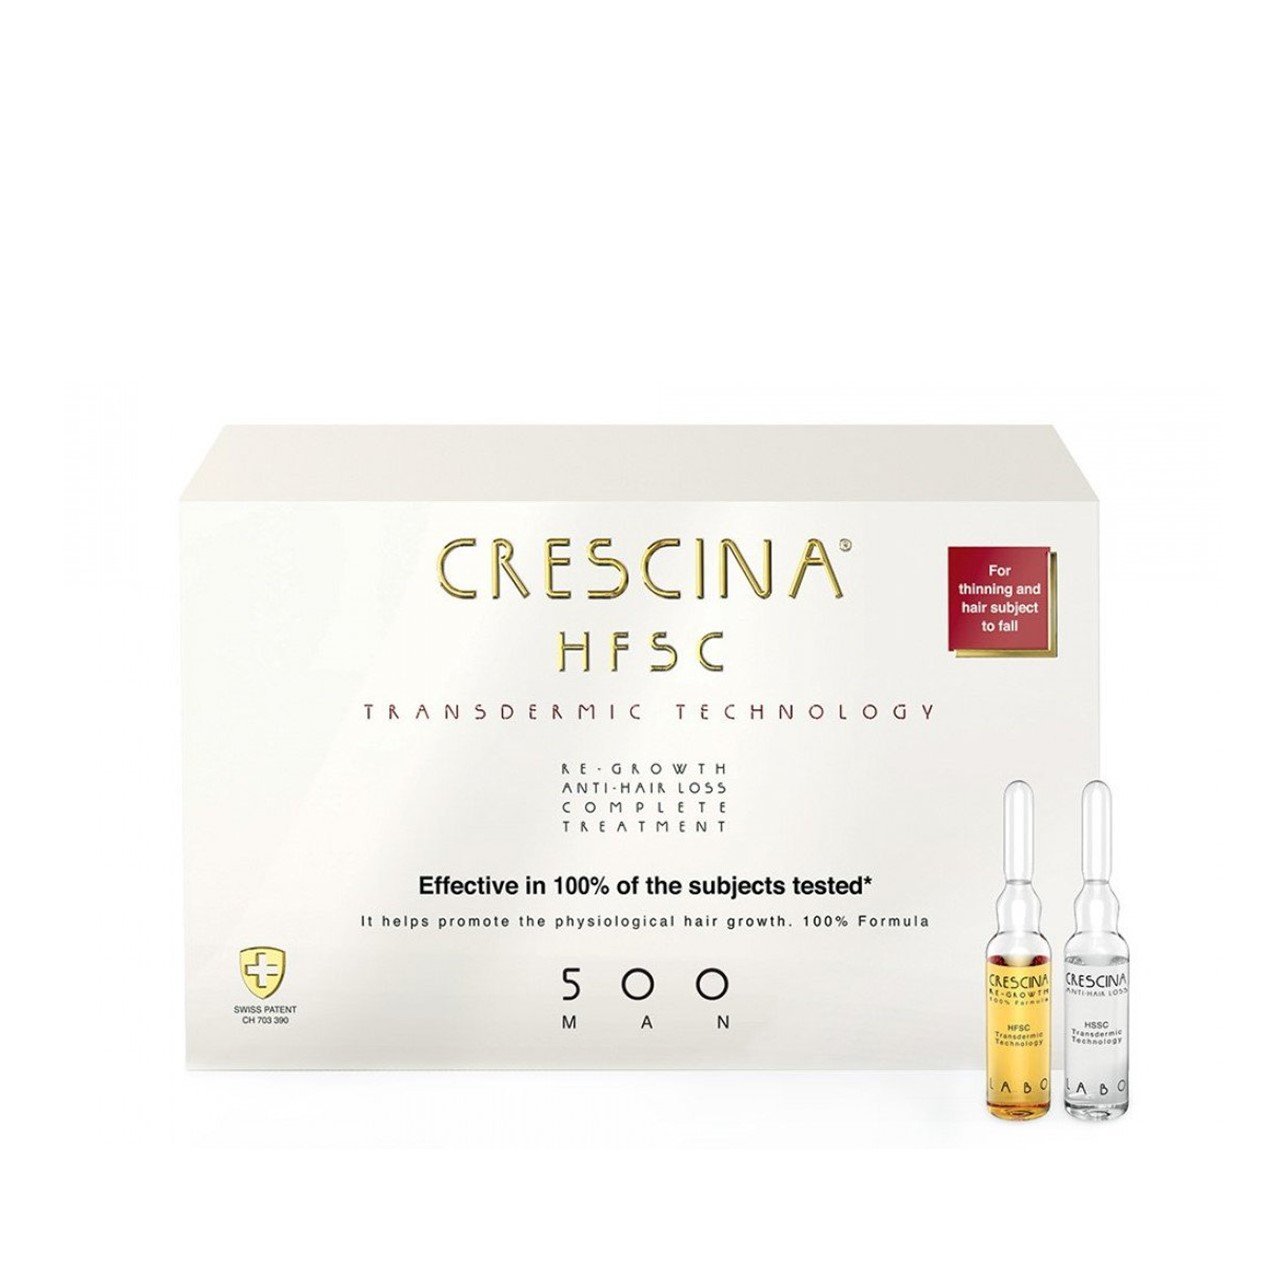 Crescina HFSC Transdermic Treatment 500 Man Ampoules 3.5ml x10+10